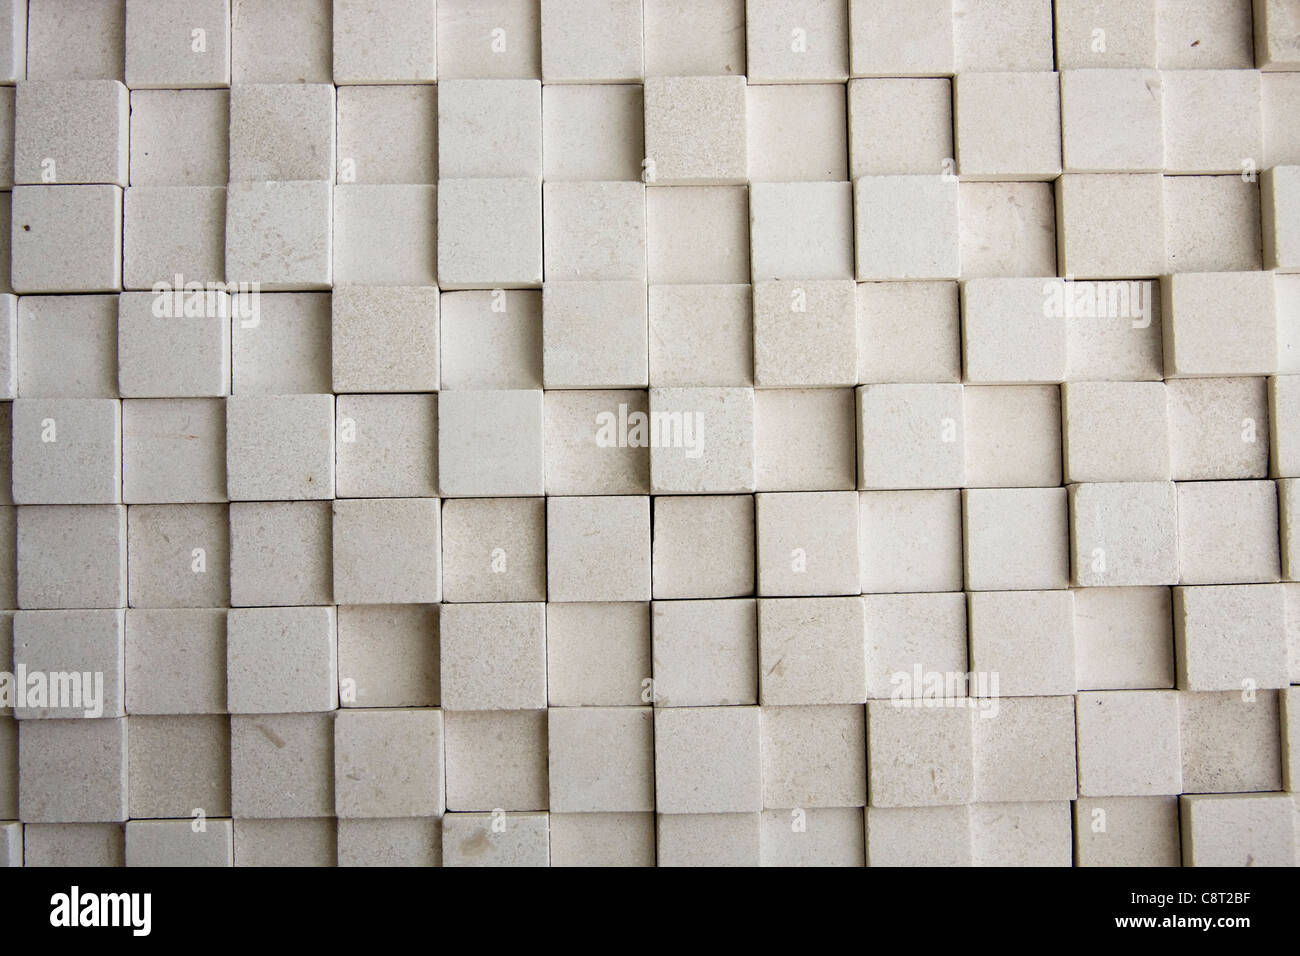 Square shaped stone tiles background. Stock Photo